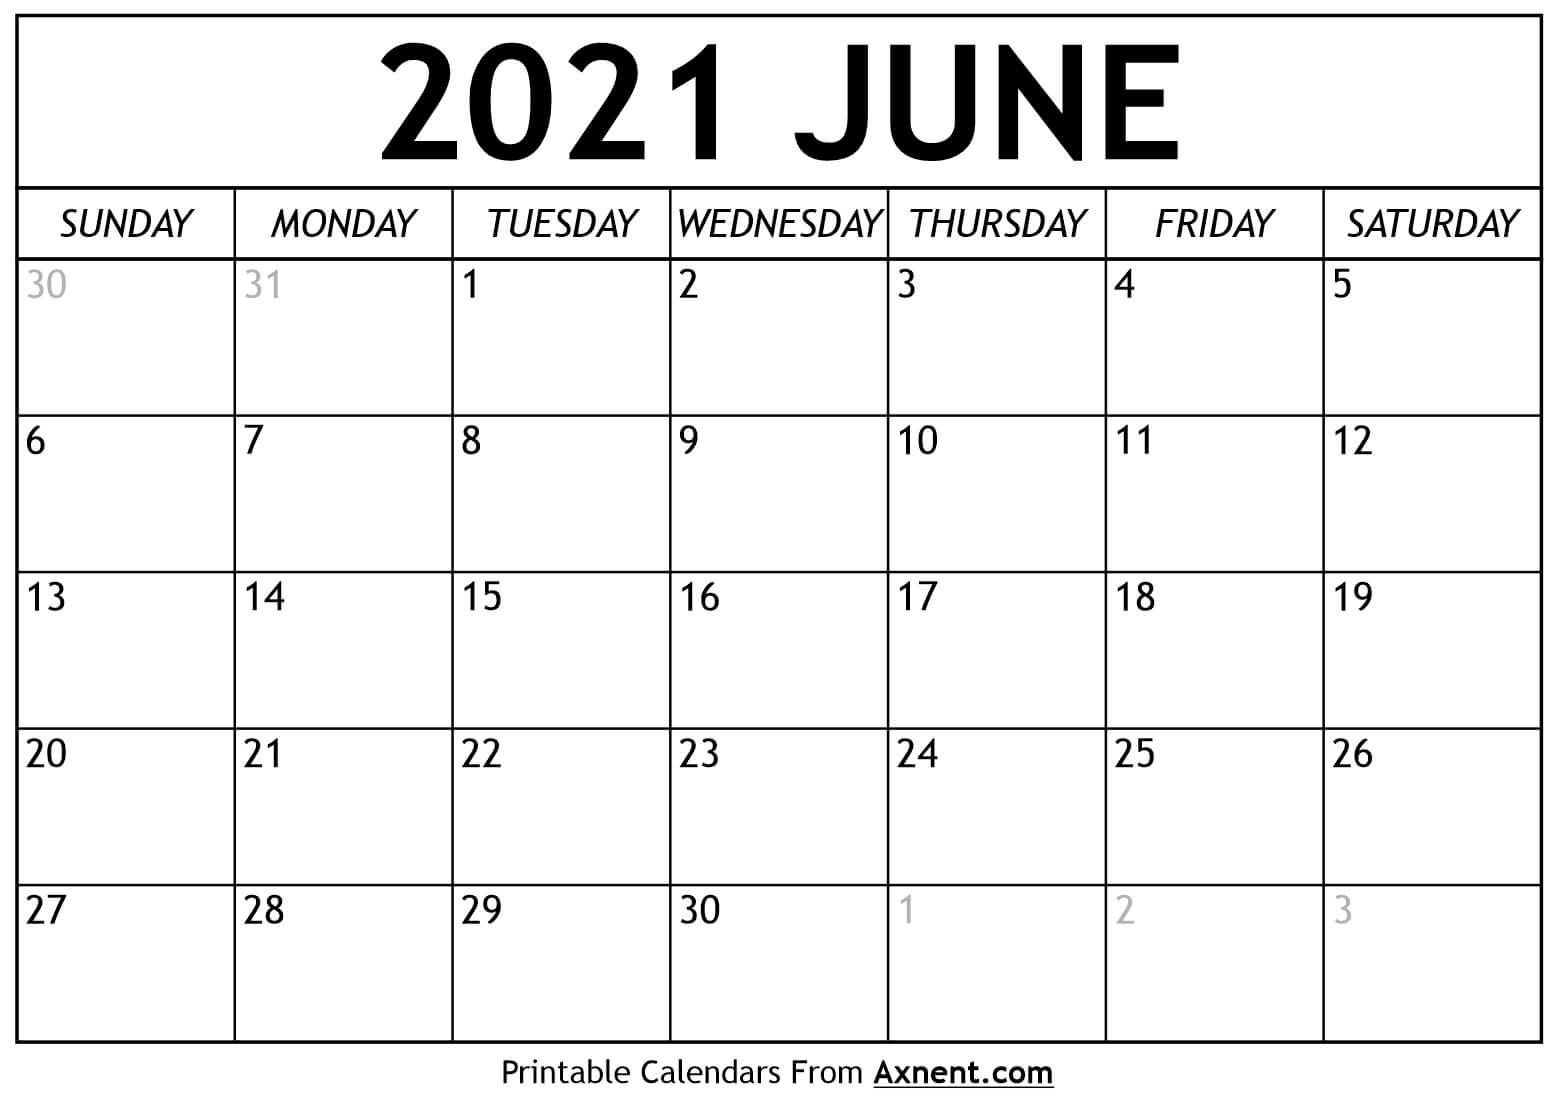 Printable June 2021 Calendar Template - Time Management Tools Printable June 2021 Calendar Template Printable June 2021 Calendar